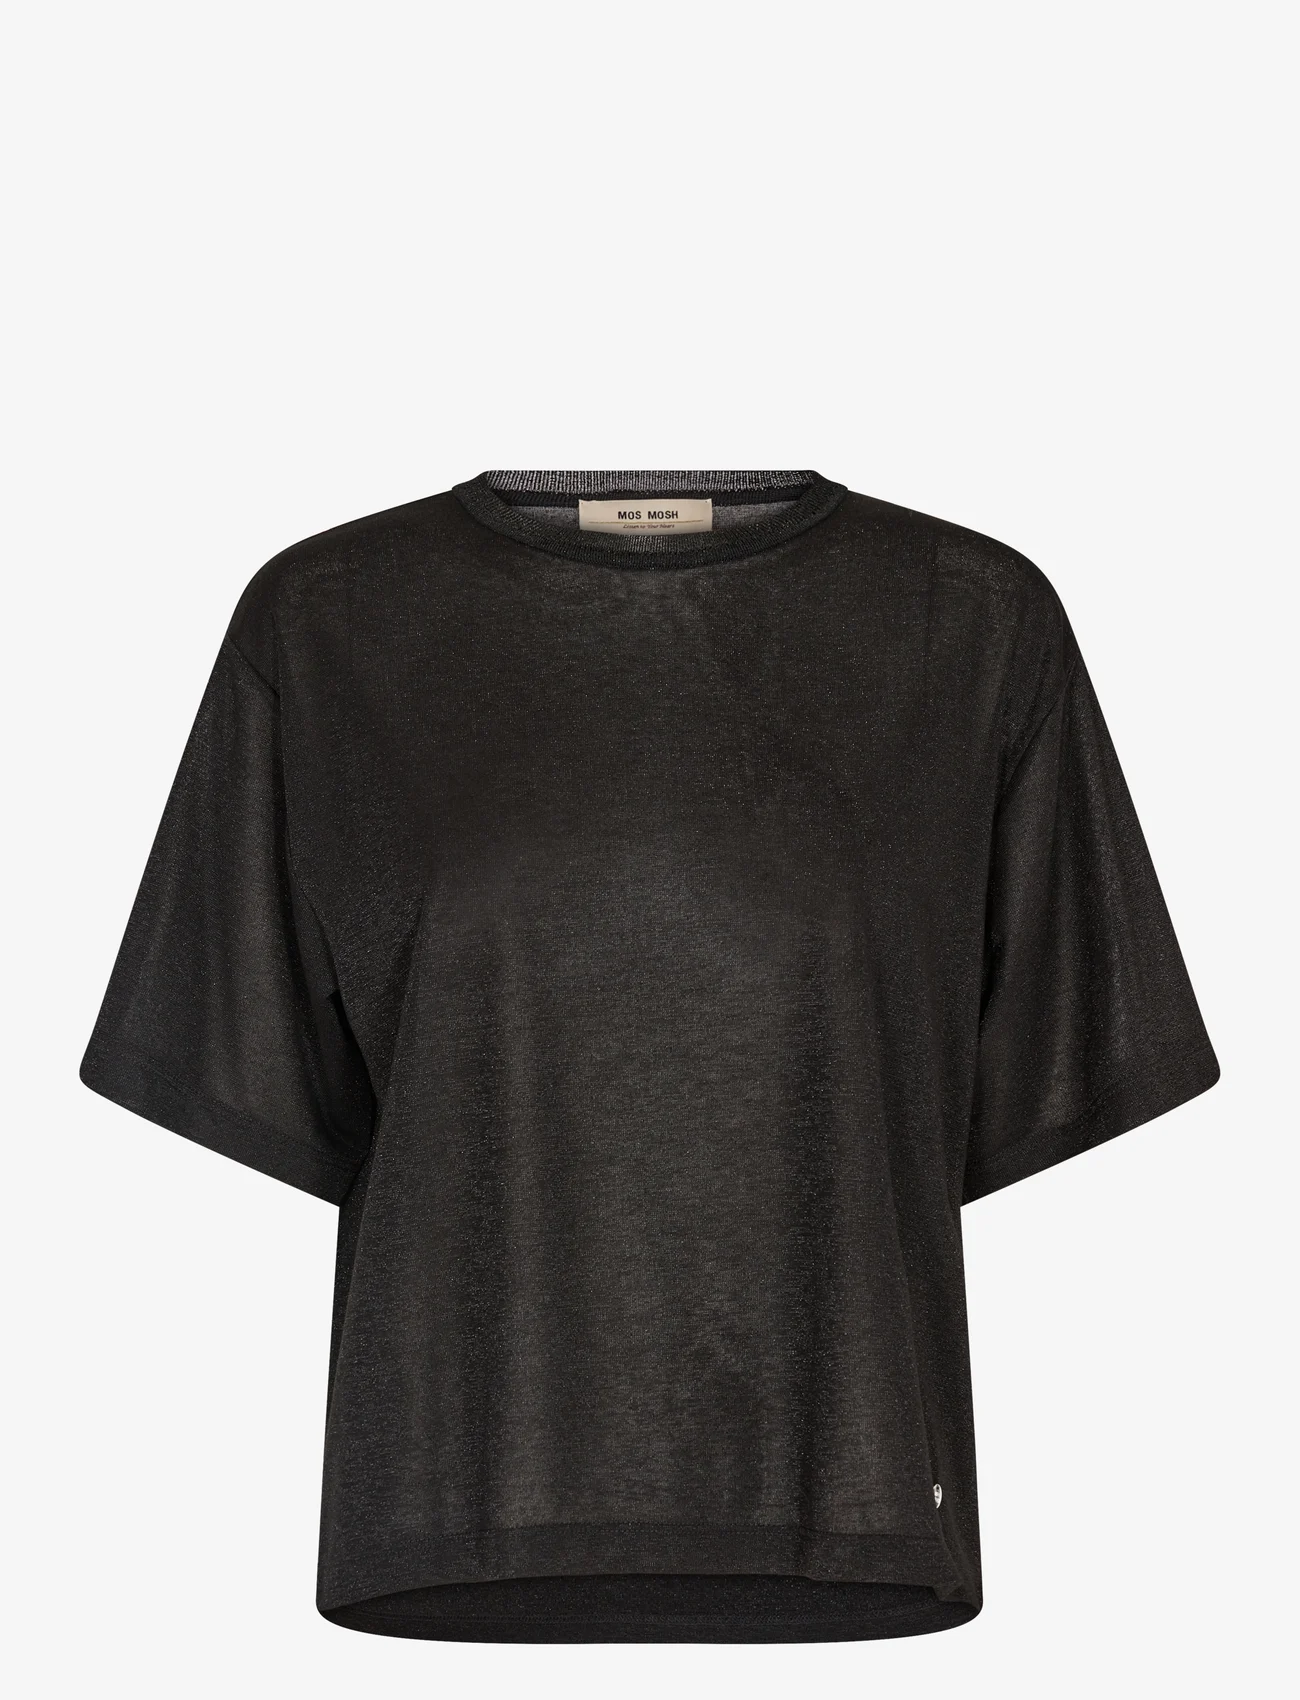 MOS MOSH - MMKit Ss Tee - t-shirt & tops - black - 0